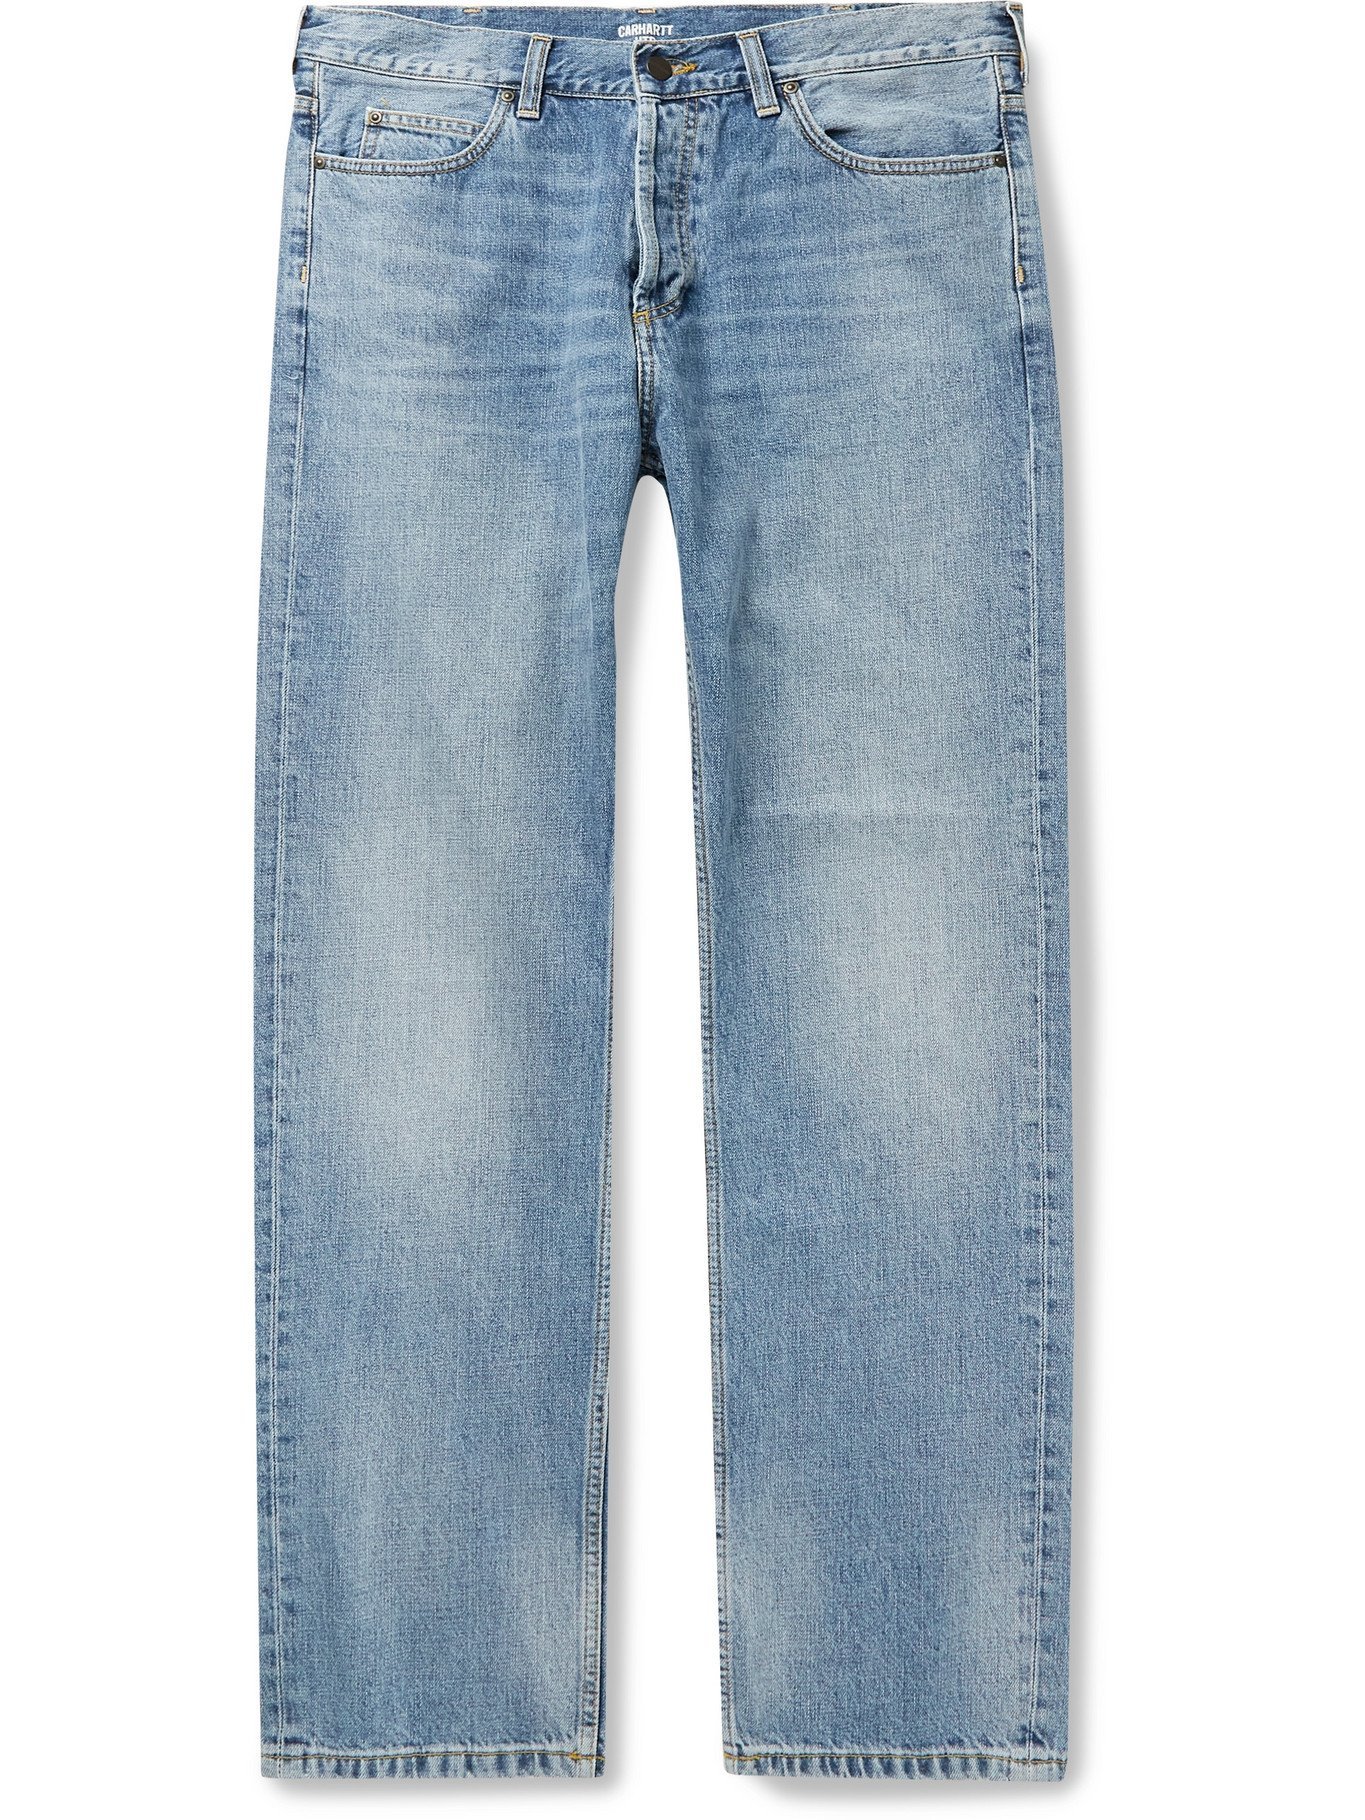 CARHARTT WIP - Marlow Denim Jeans - Blue - UK/US 30 Carhartt WIP